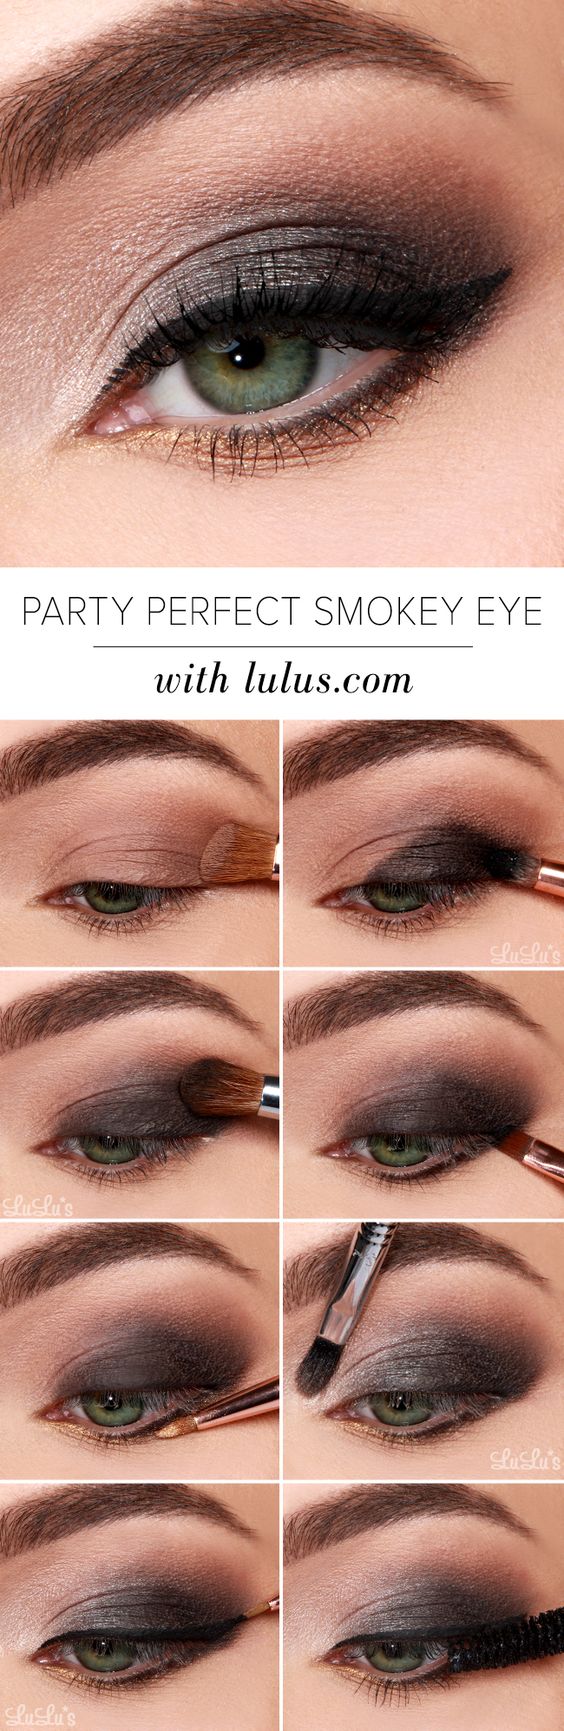 40 hottest smokey eye makeup ideas 2019 & smokey eye tutorials for